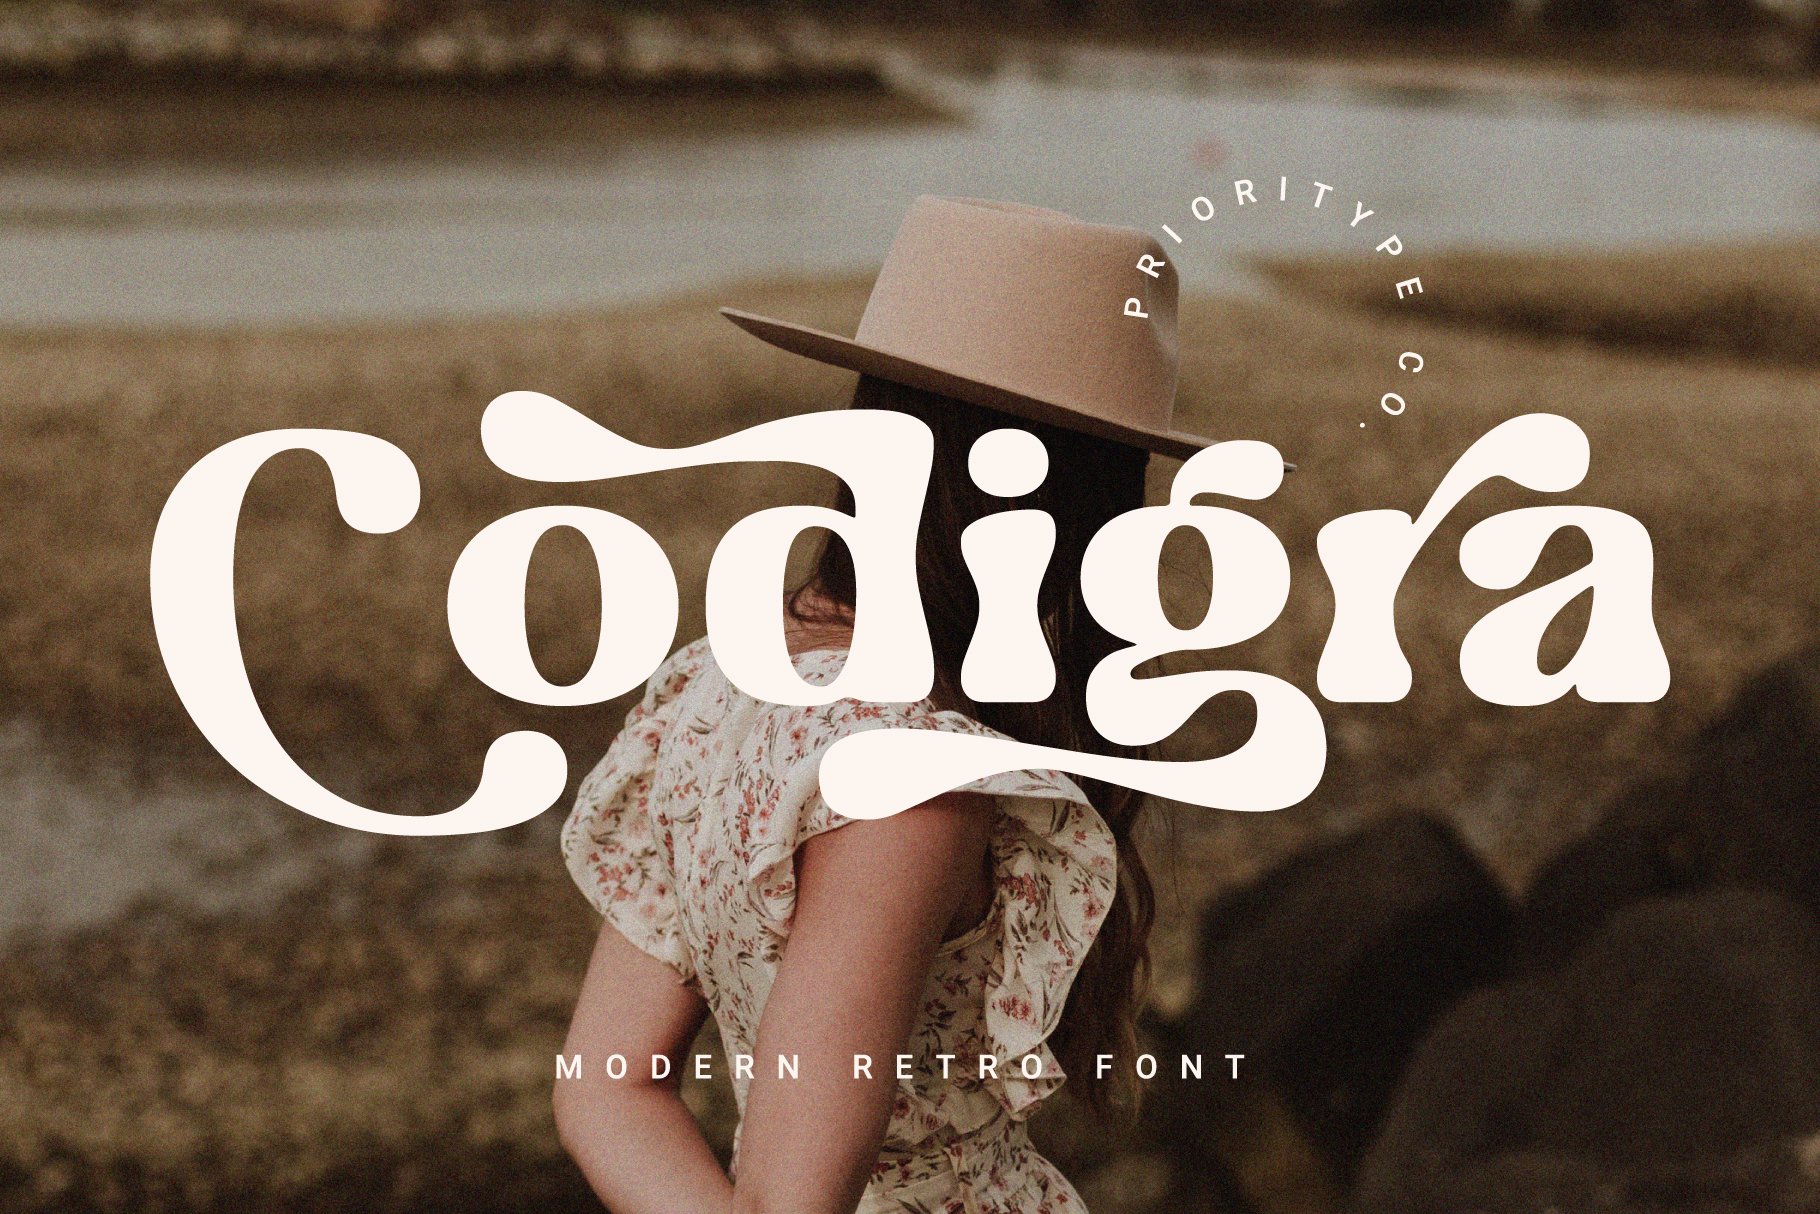 Codigra - Modern Retro Font cover image.